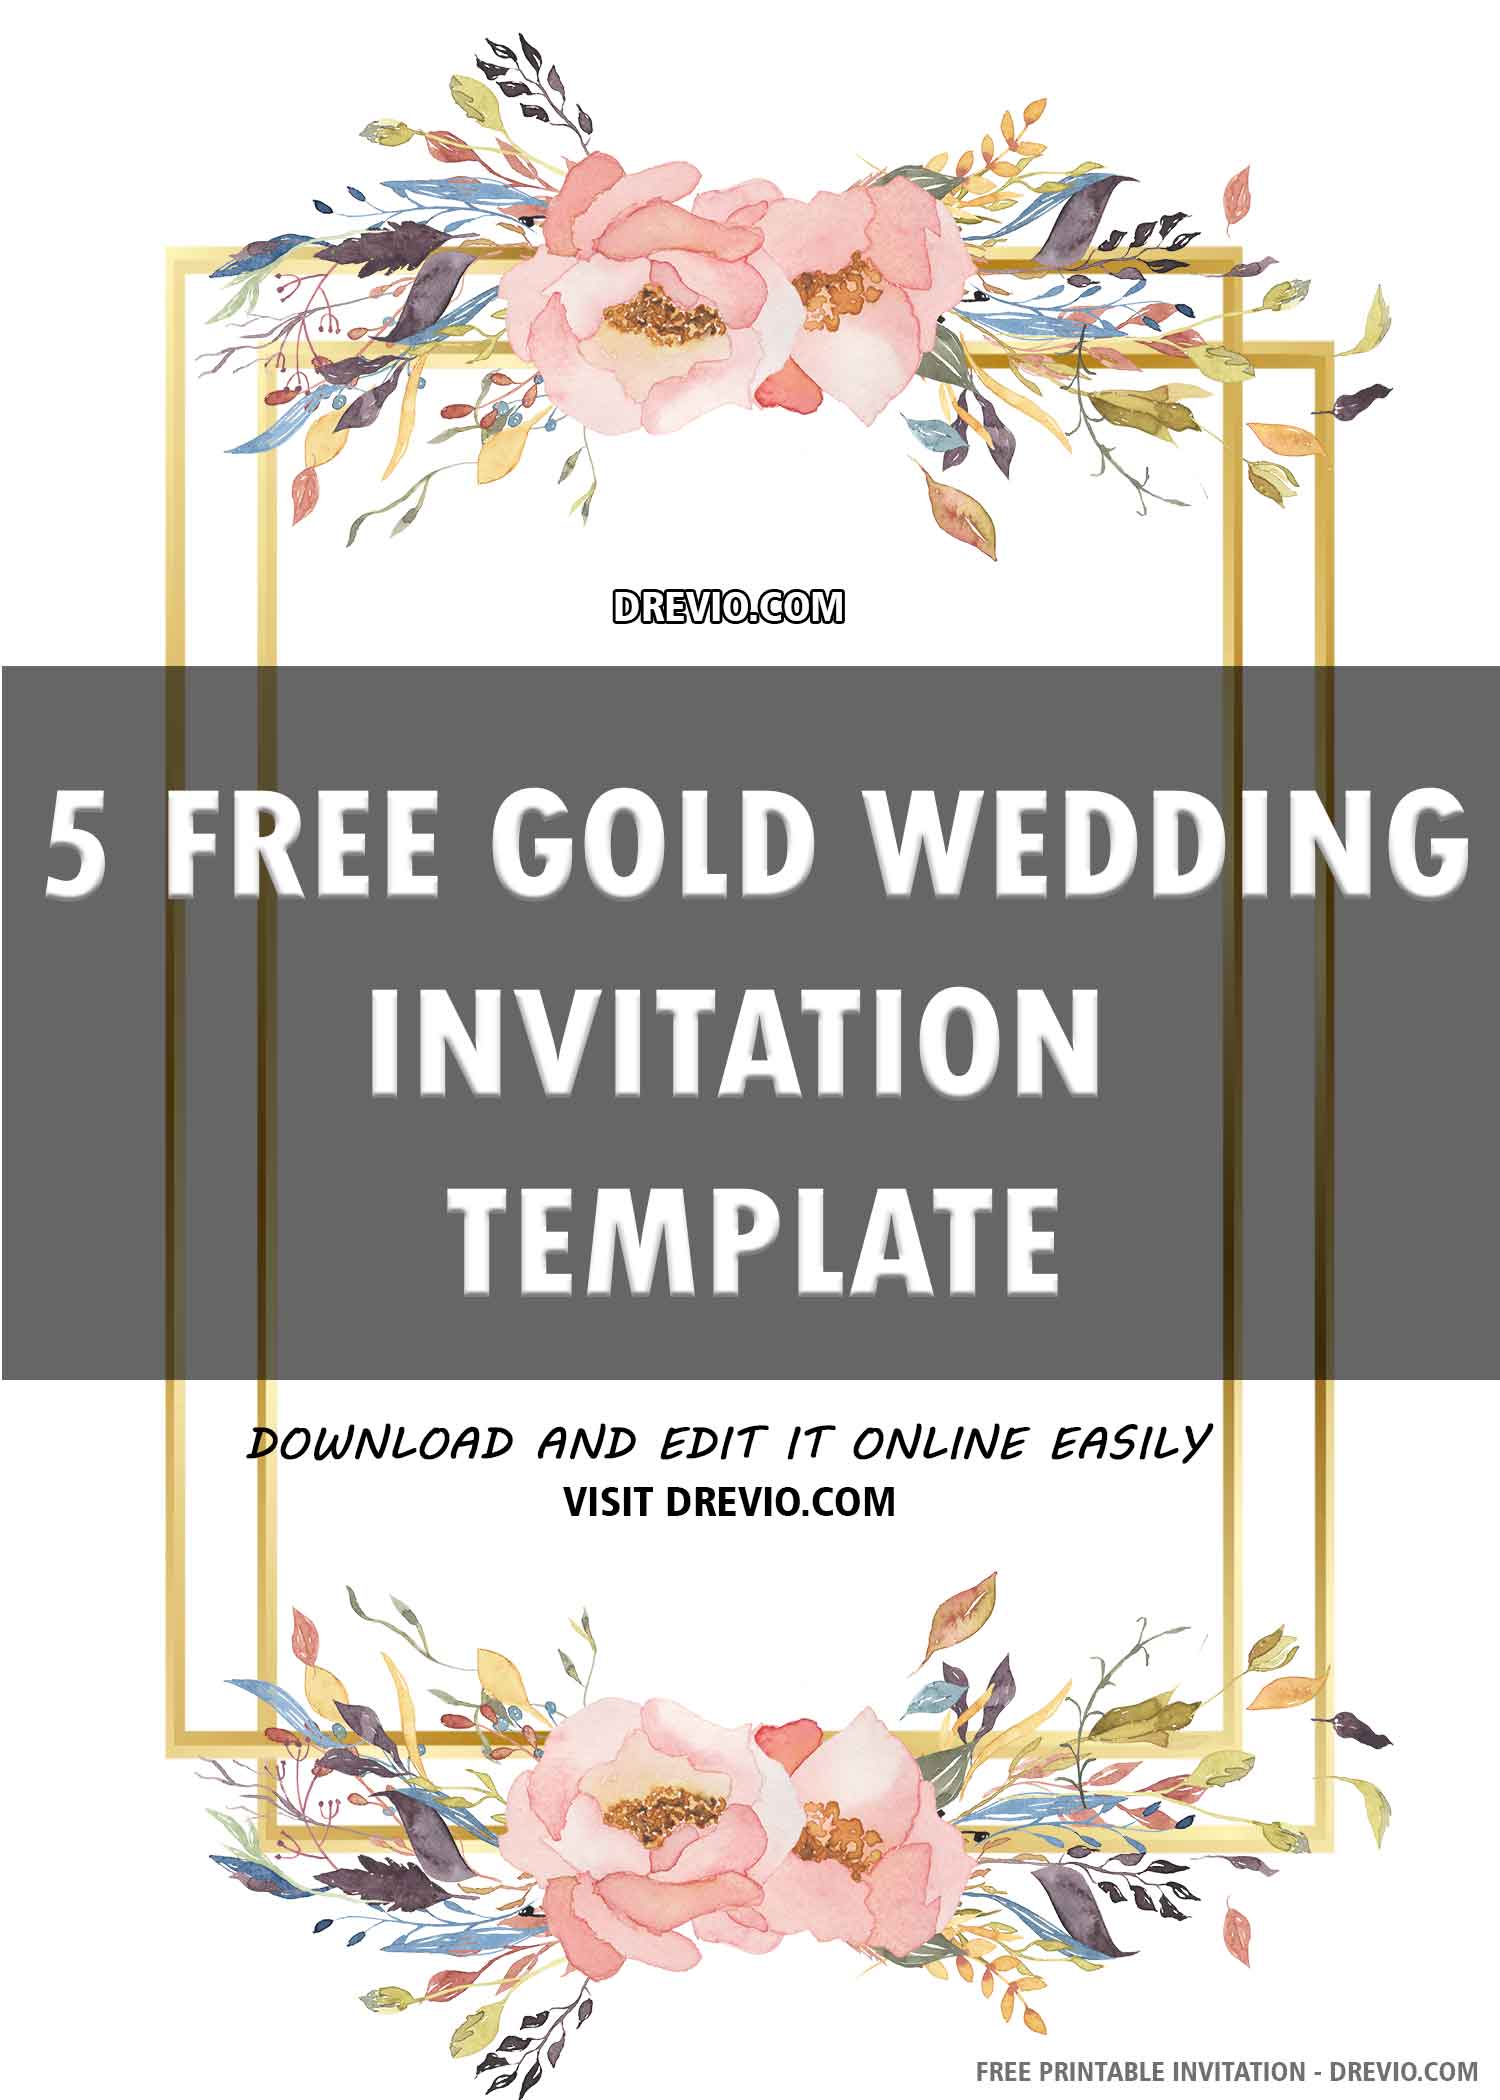  FREE  PRINTABLE  Gold Wedding  Invitation  Template 